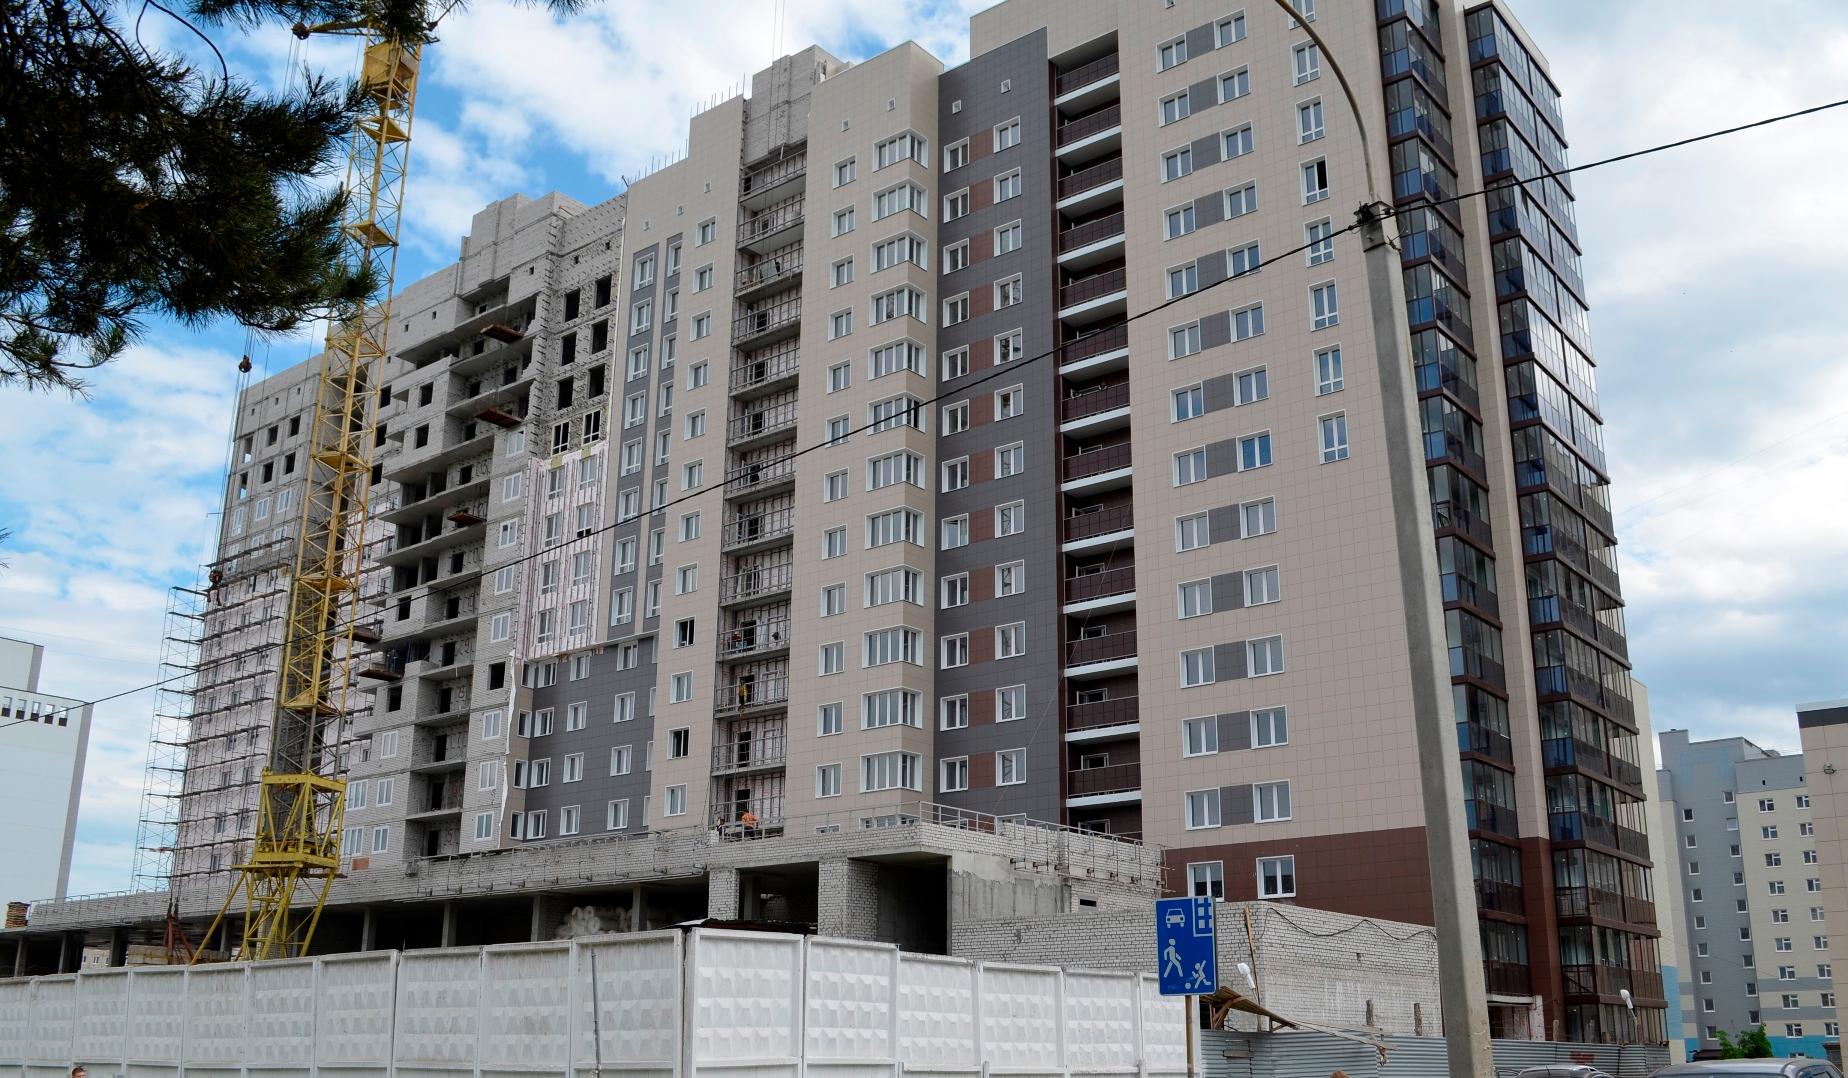 Строительство проблемного многоквартирника в Барнауле снова замедлилось